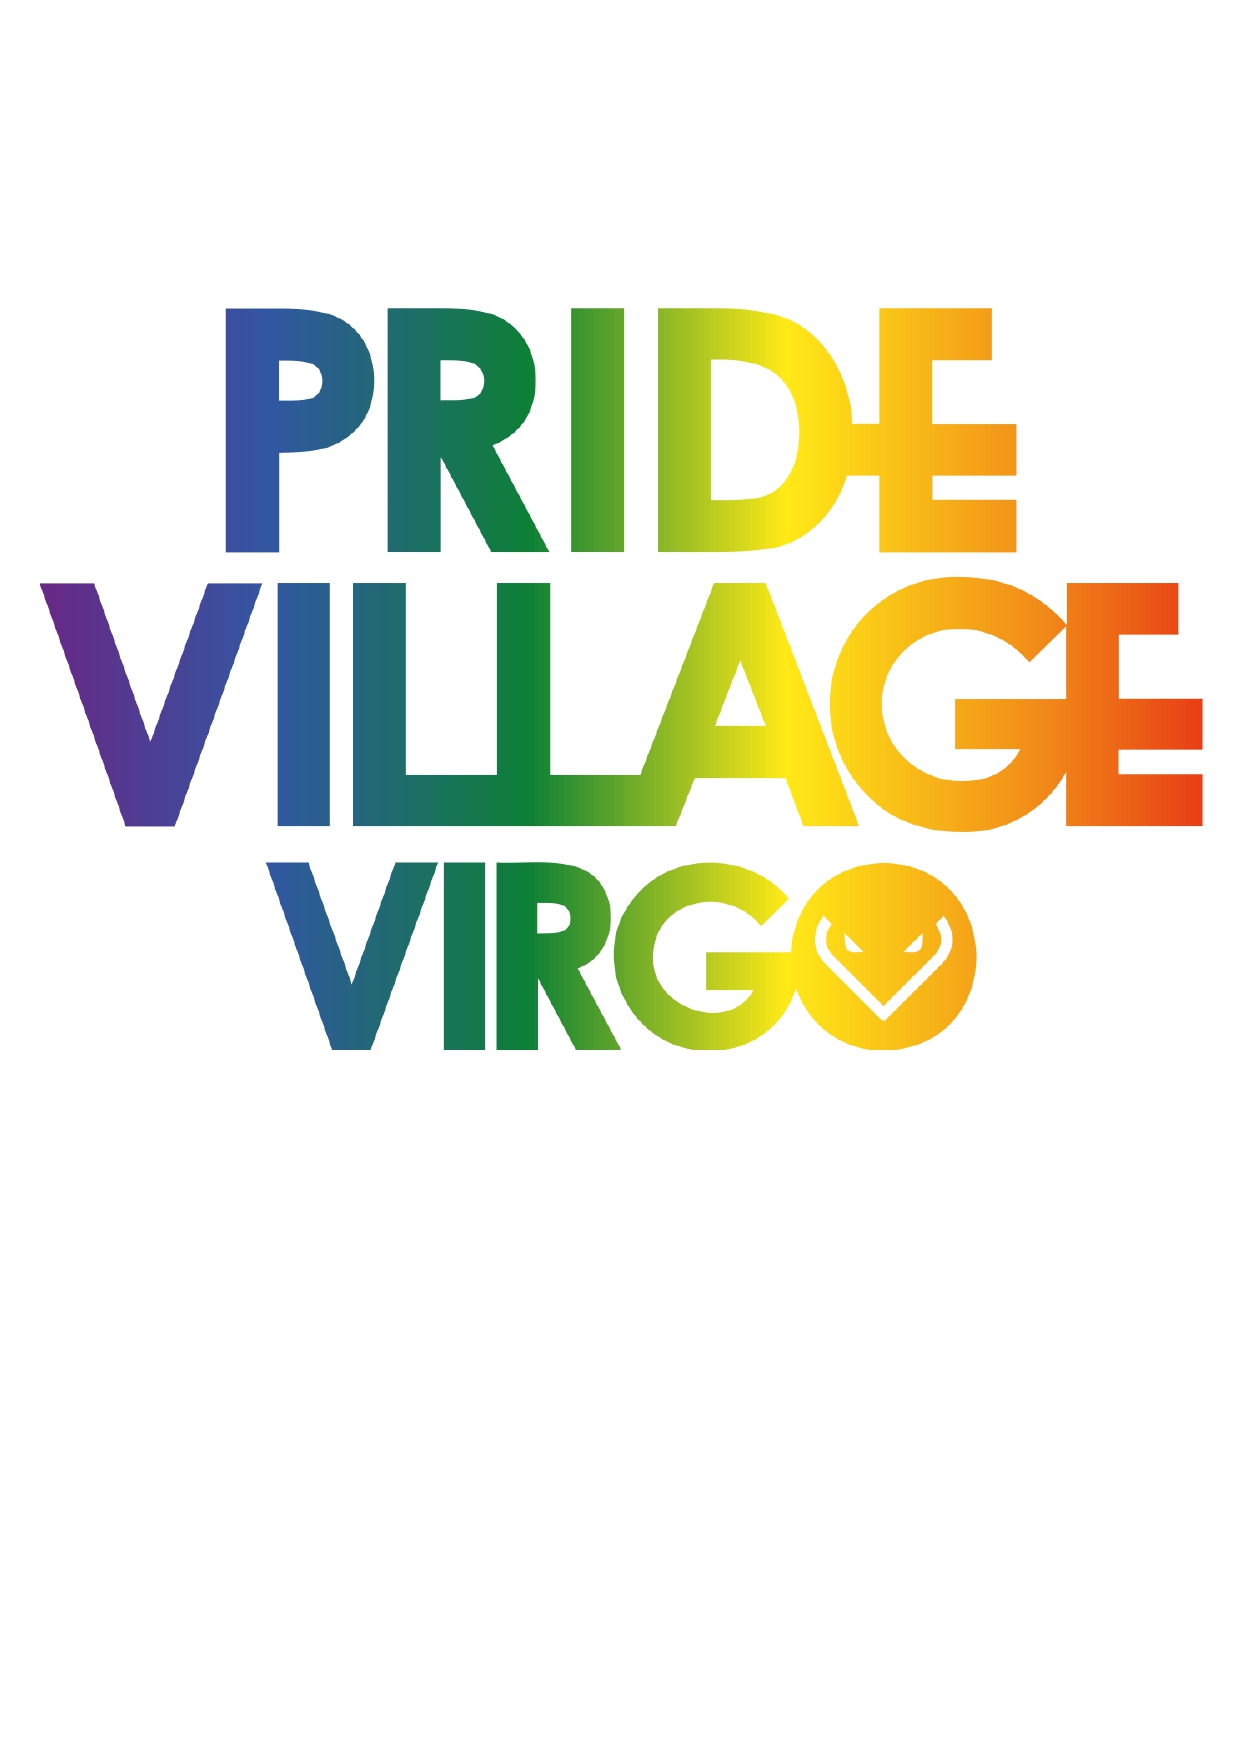 Virgo Fund sarà il main unico sponsor del PRIDE VILLAGE VIRGO